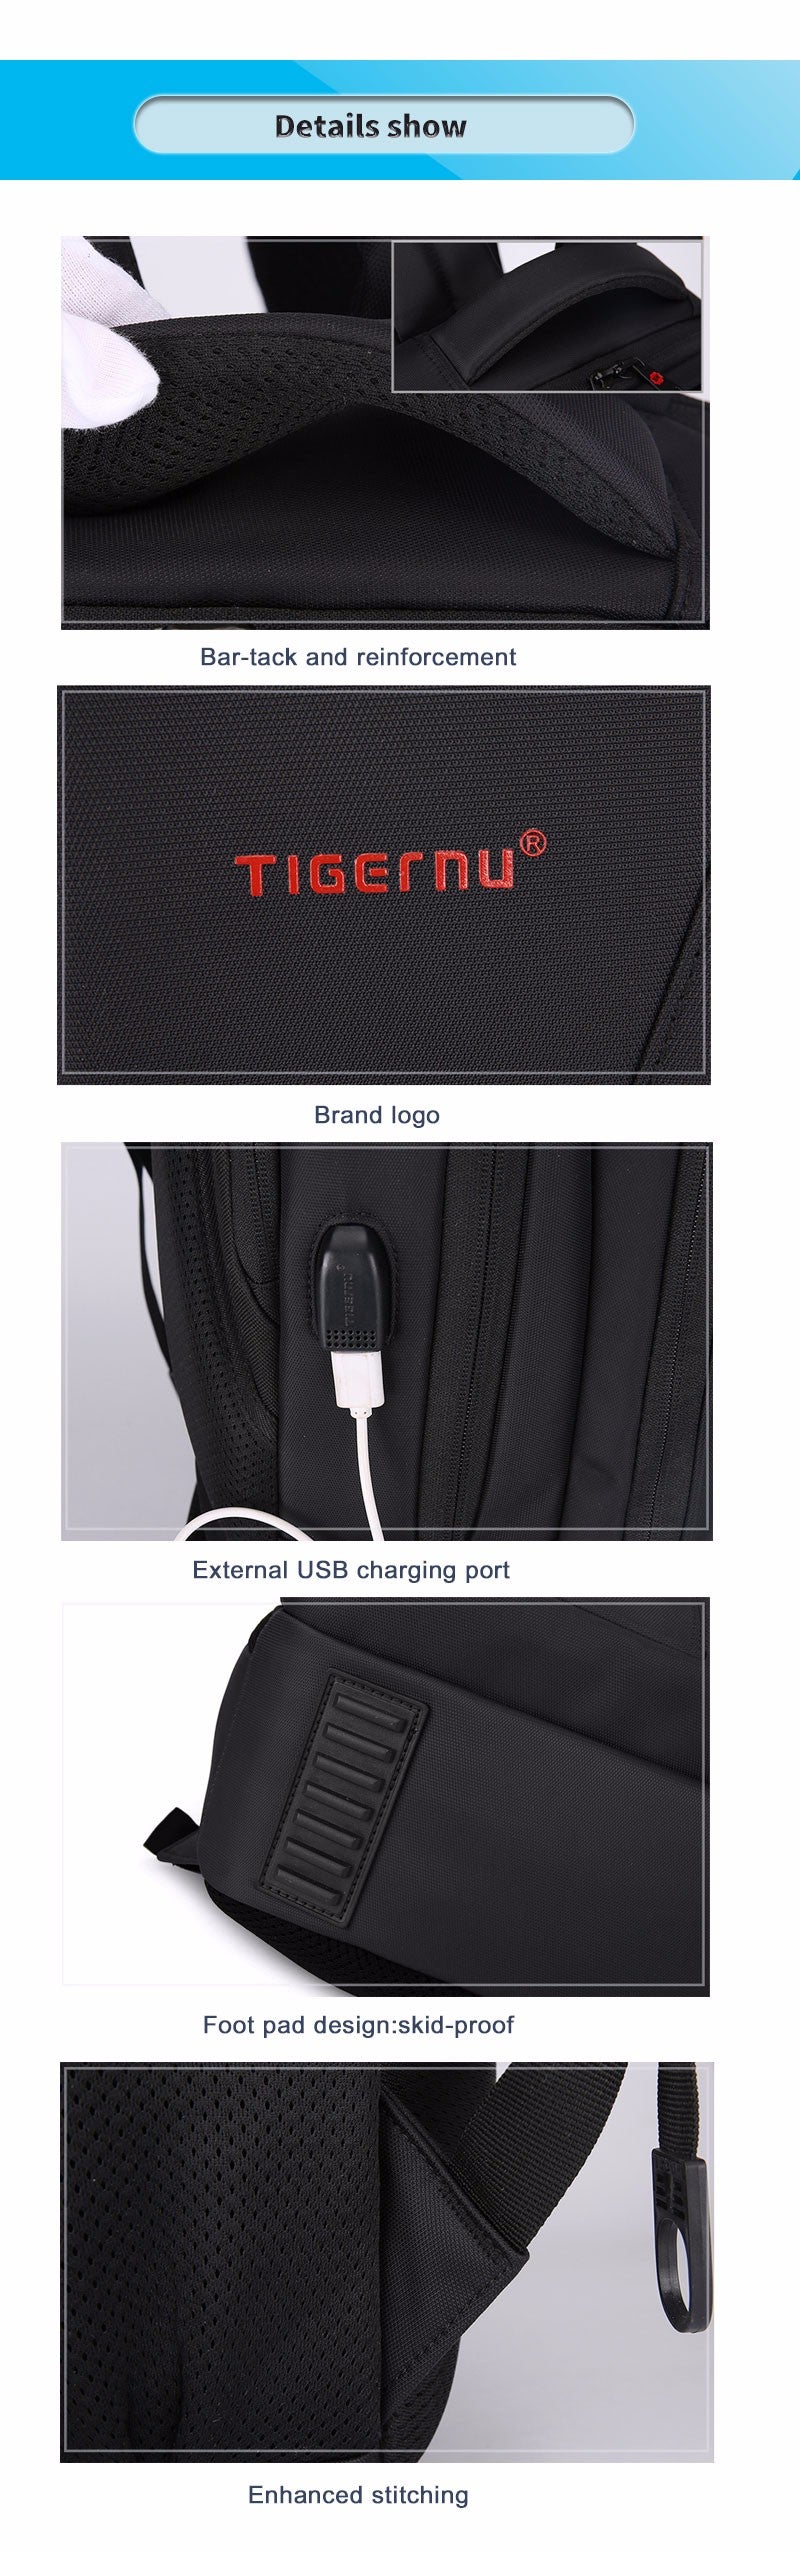 Stylish Sleek Professional Laptop Backpack with External USB Port